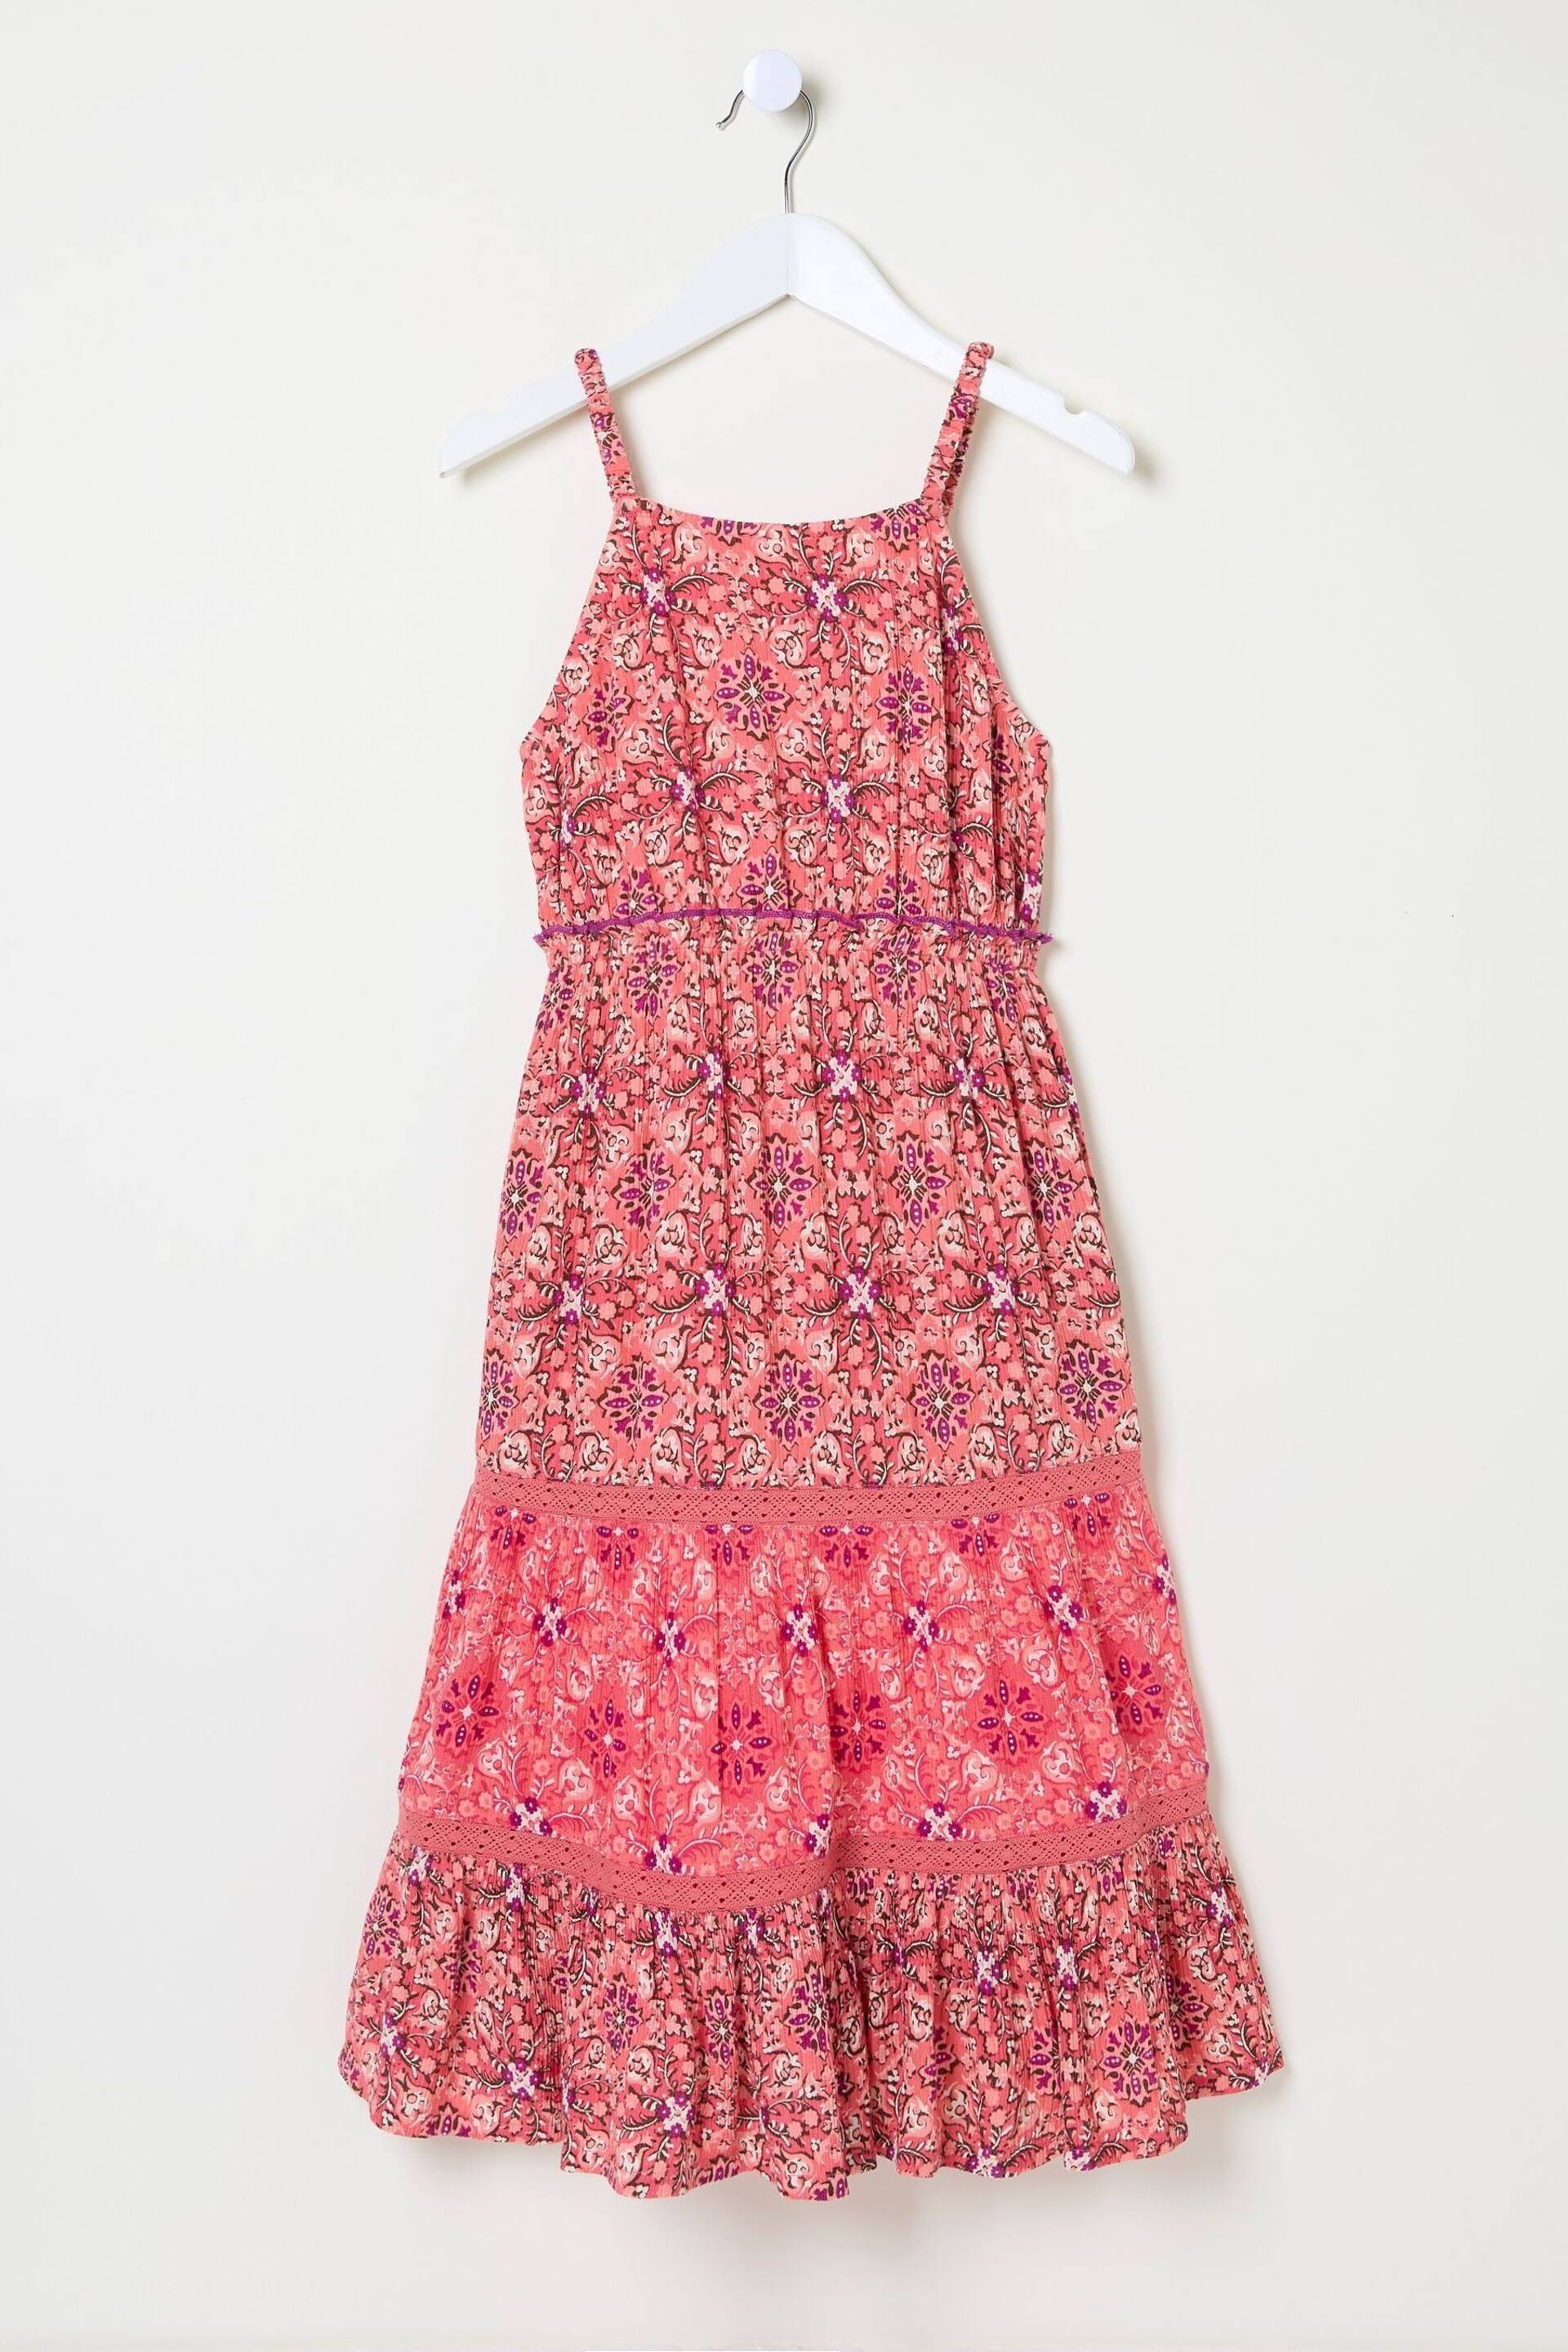 FatFace Pink Myla Geo Midi Dress - Image 4 of 4